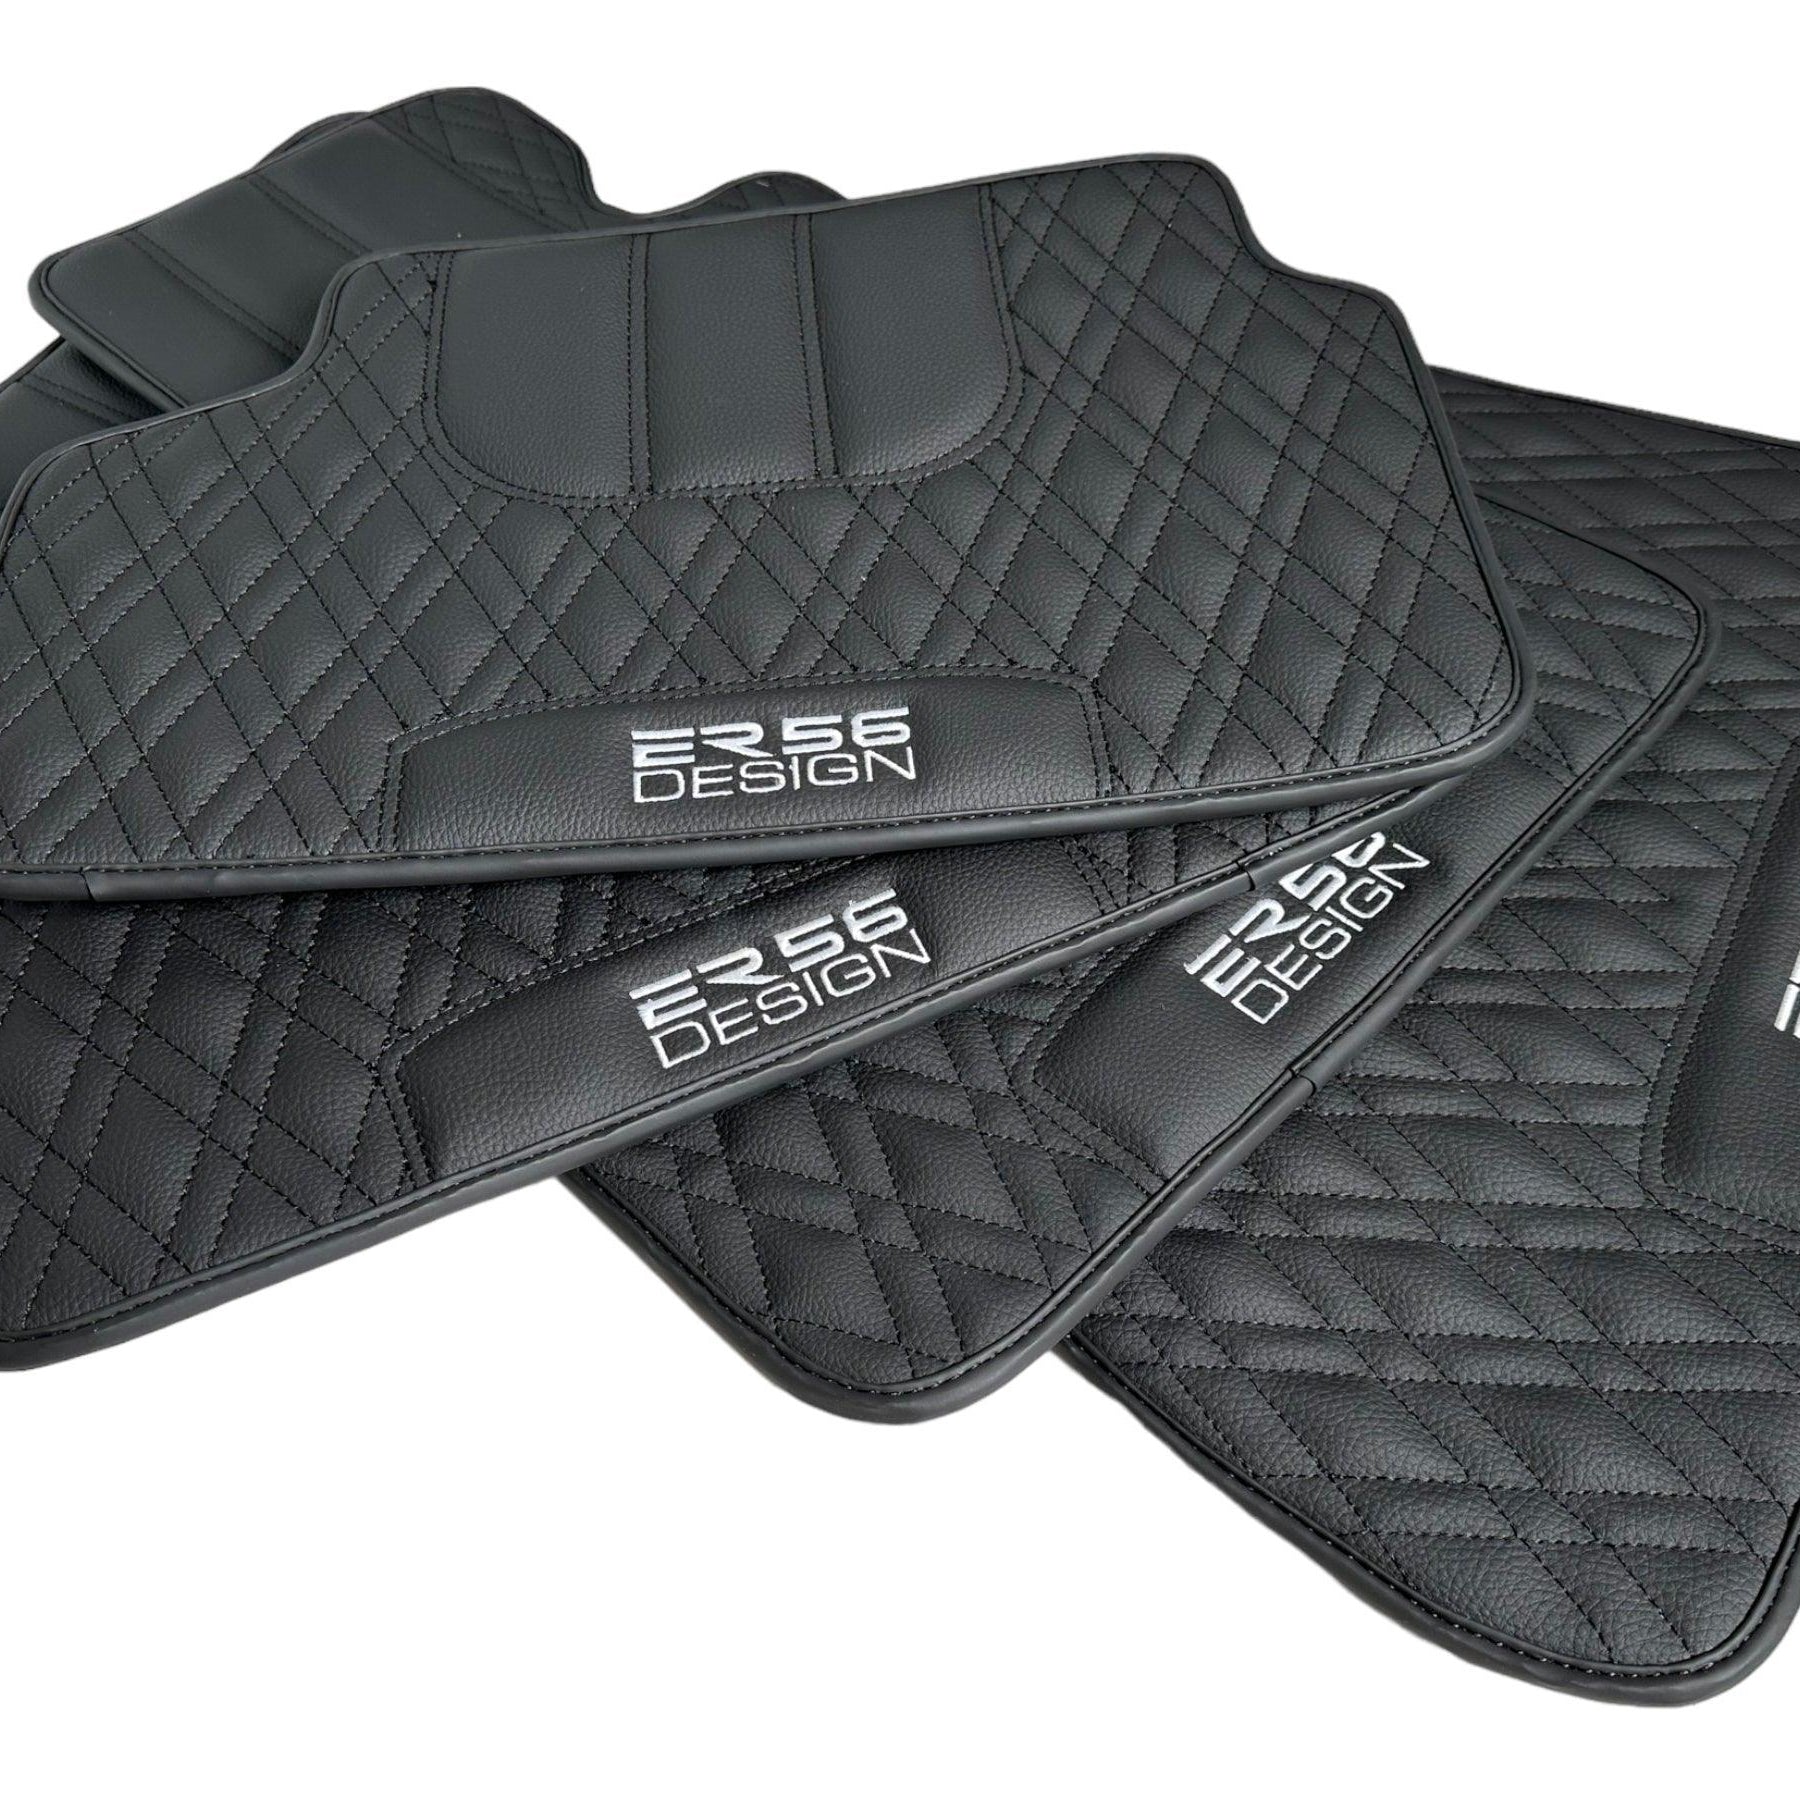 Floor Mats For BMW 5 Series F11 5-doors Wagon Black Leather Er56 Design - AutoWin